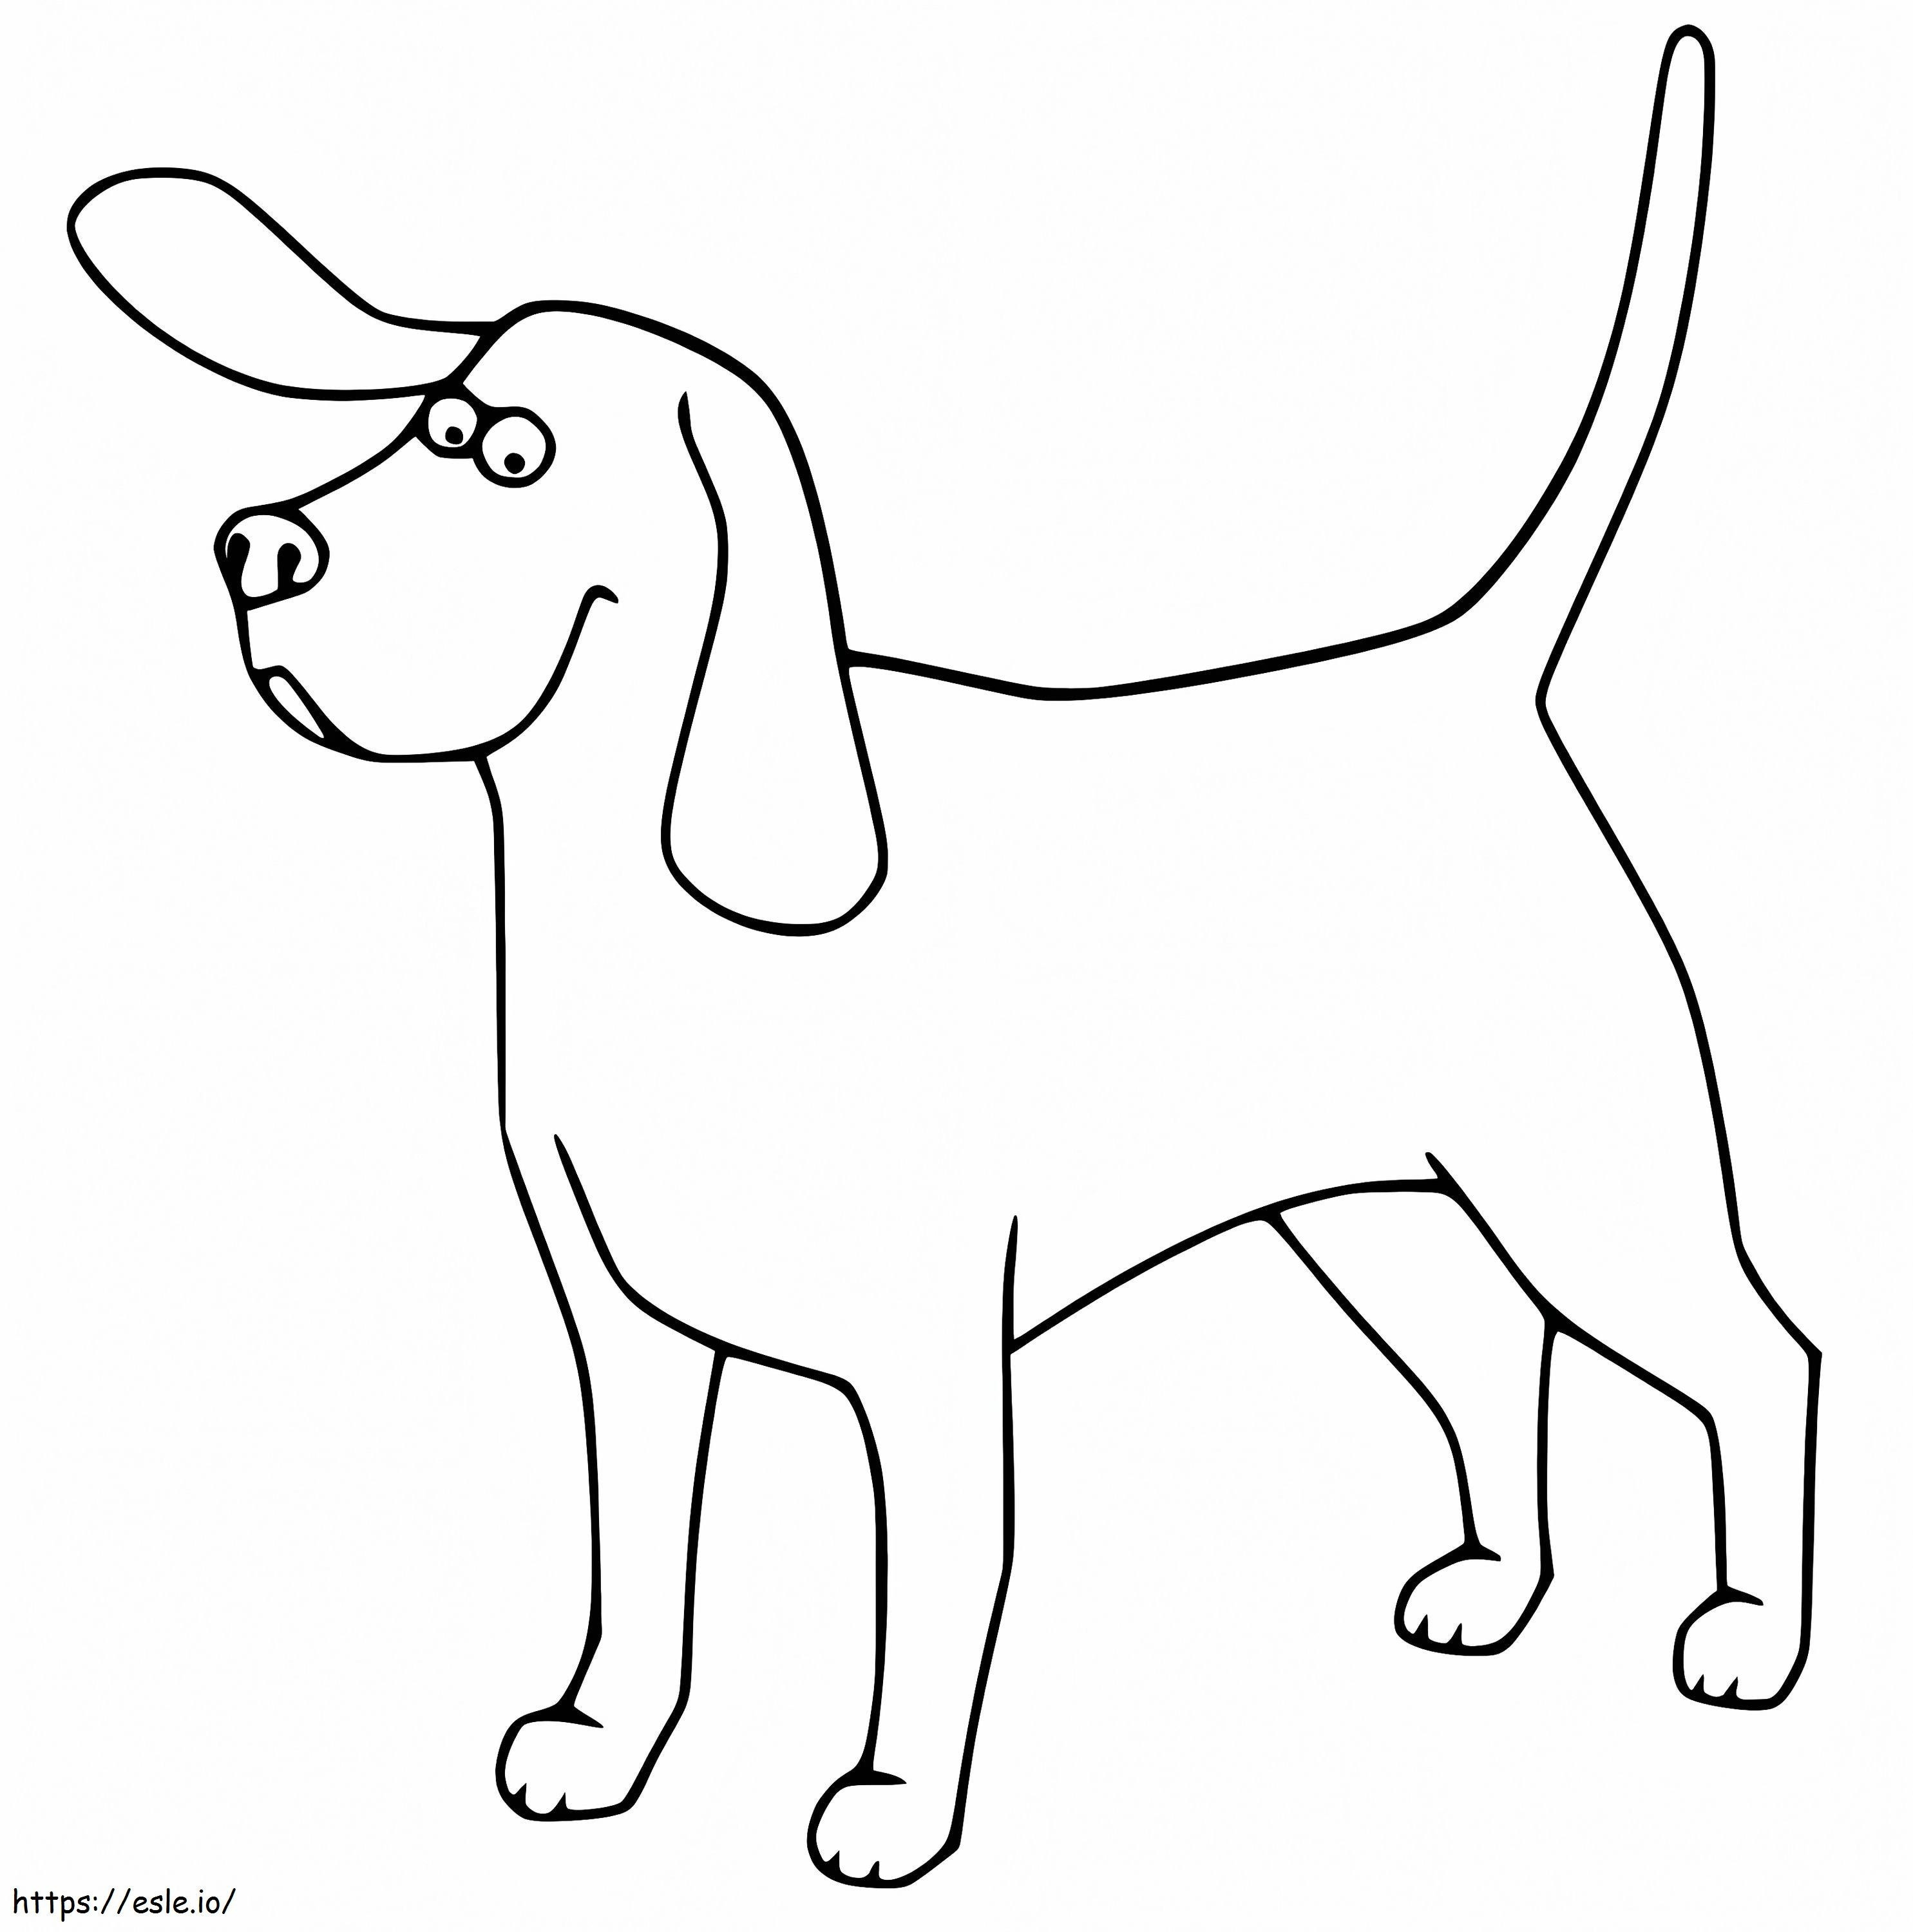 Grappige Beagle-hond kleurplaat kleurplaat